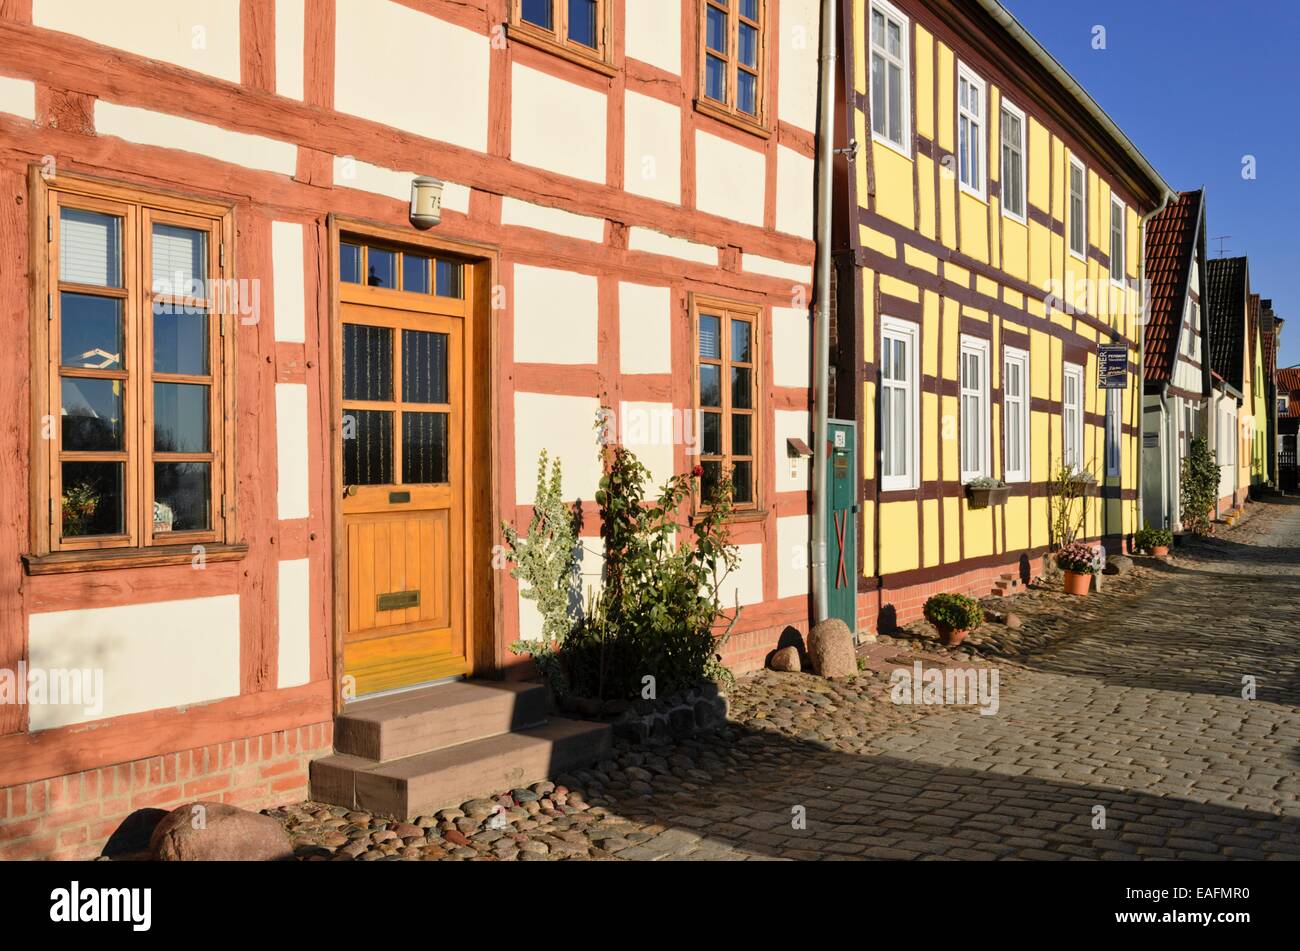 Half-timbered houses, Havelberg, Germany Stock Photo